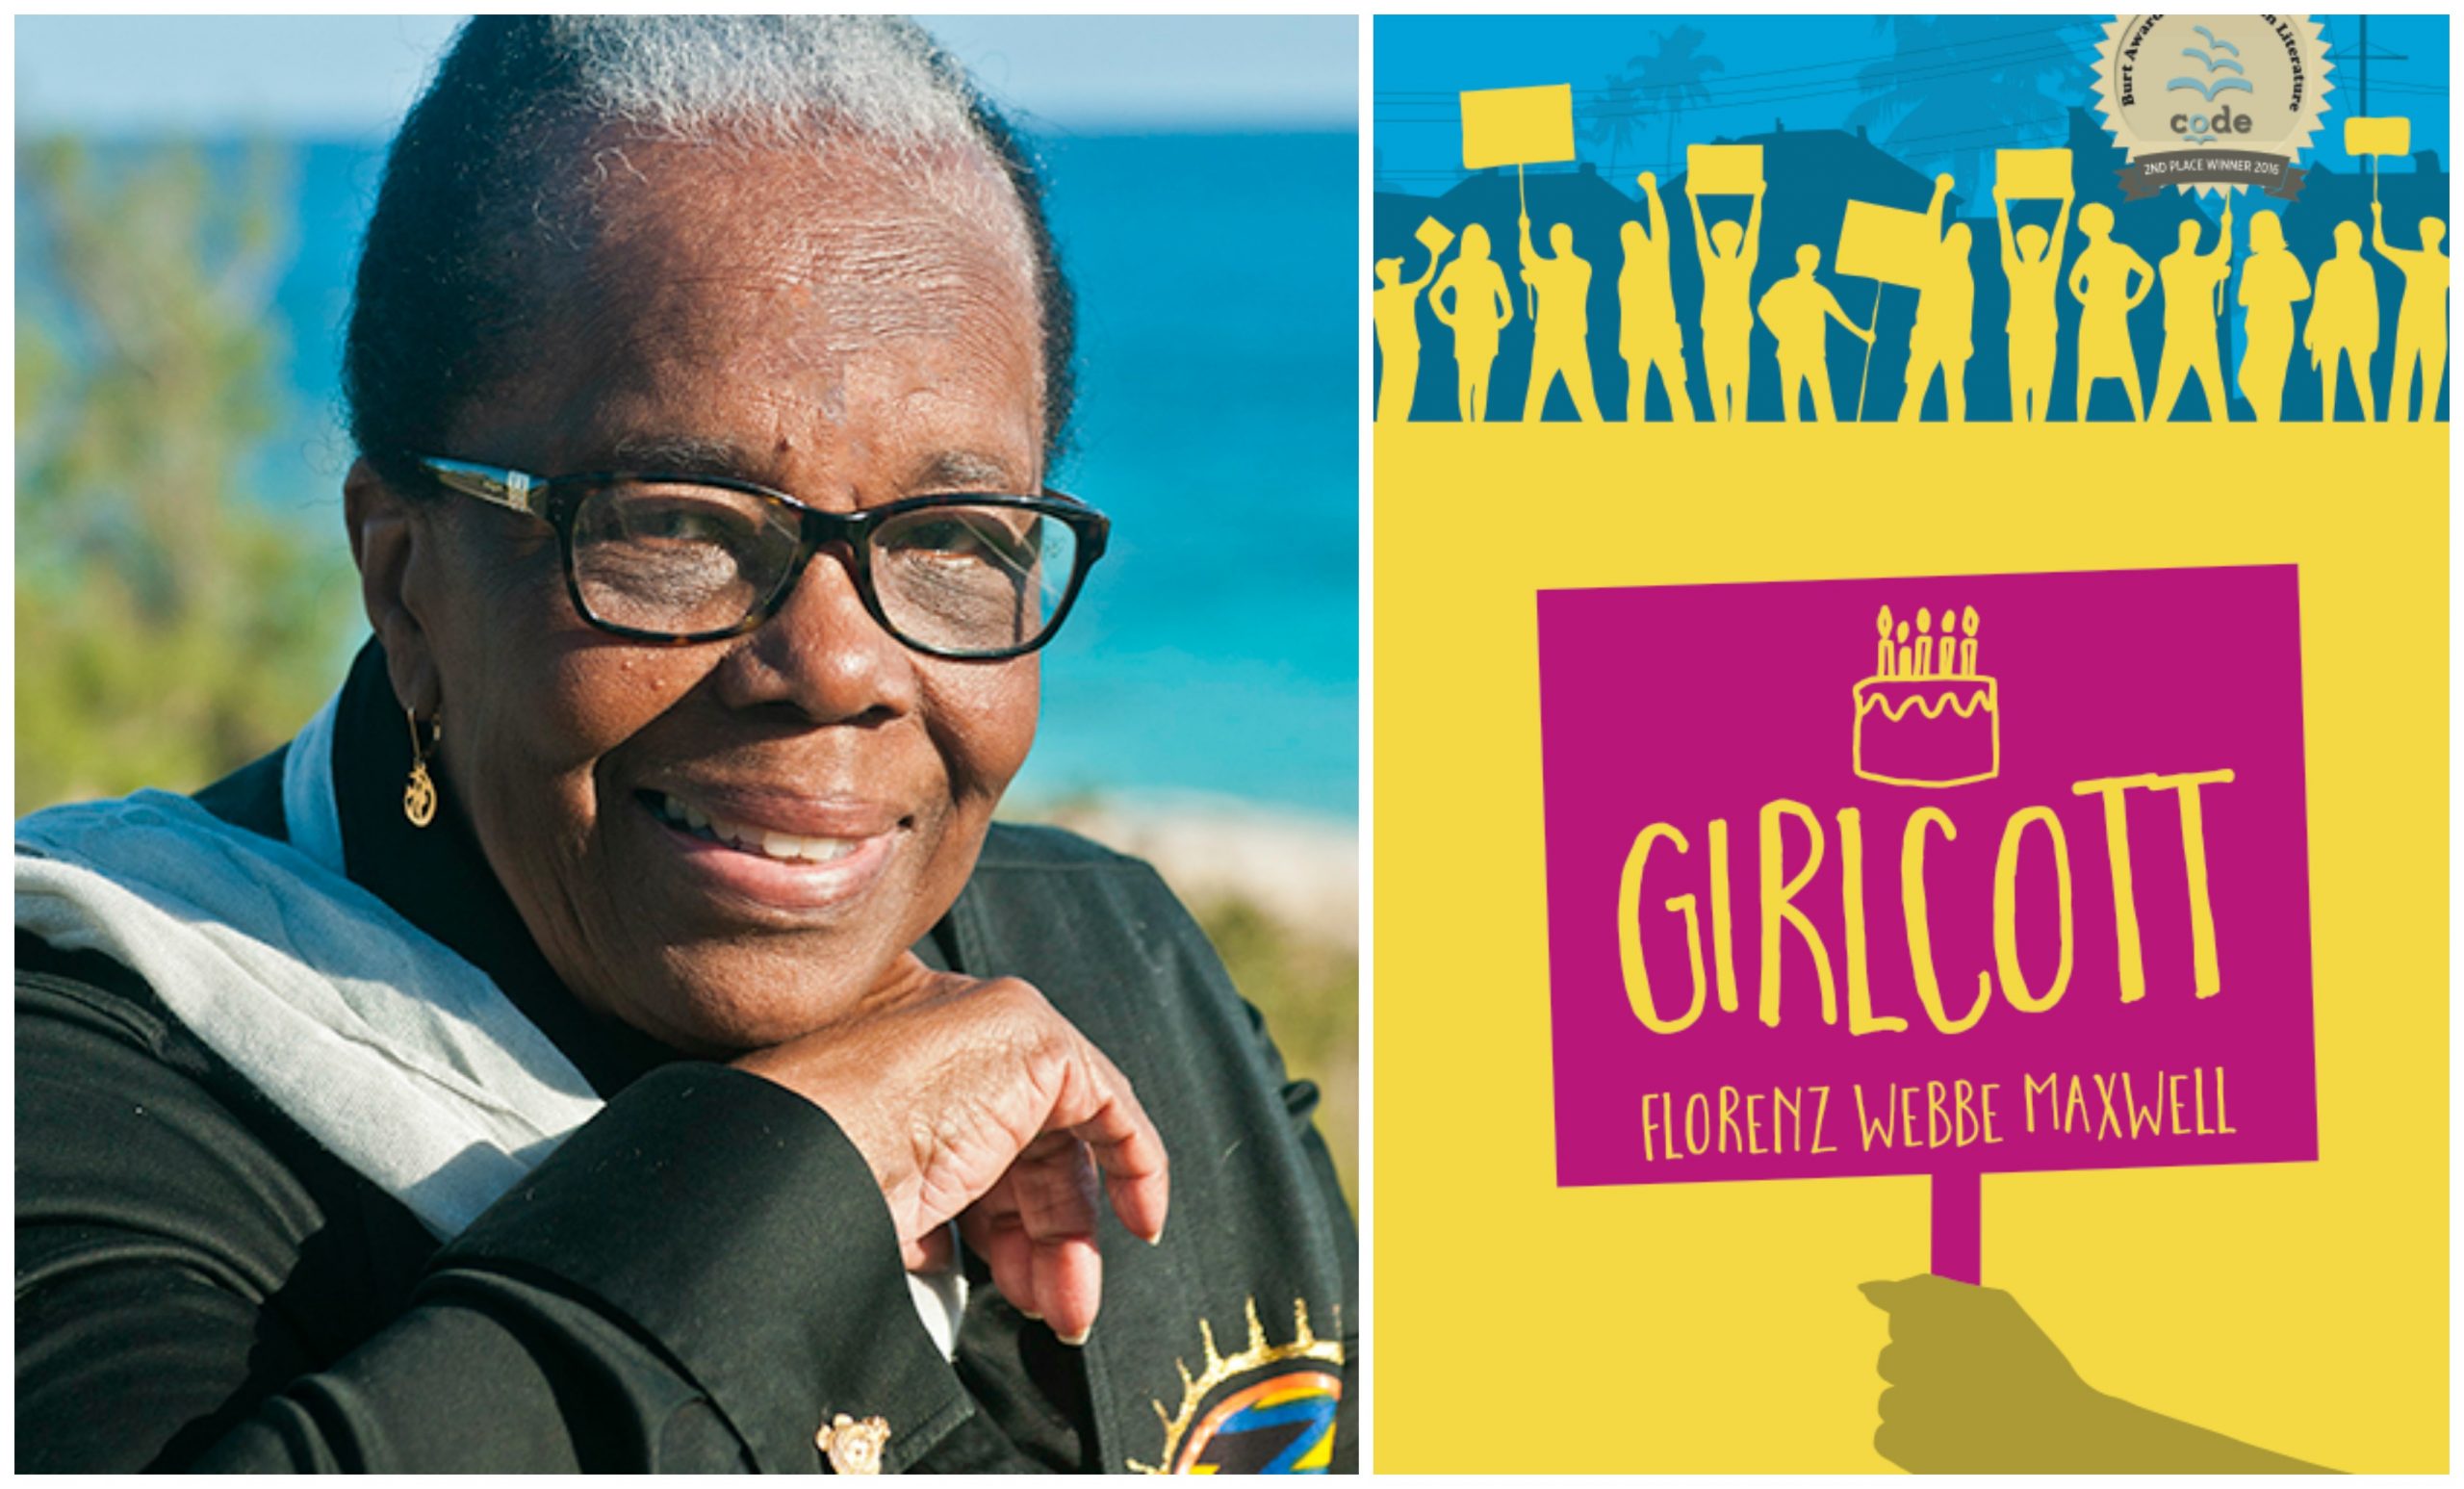 Author Florenz Webbe Maxwell and the cover of her award wining Caribbean novel, Girlcott